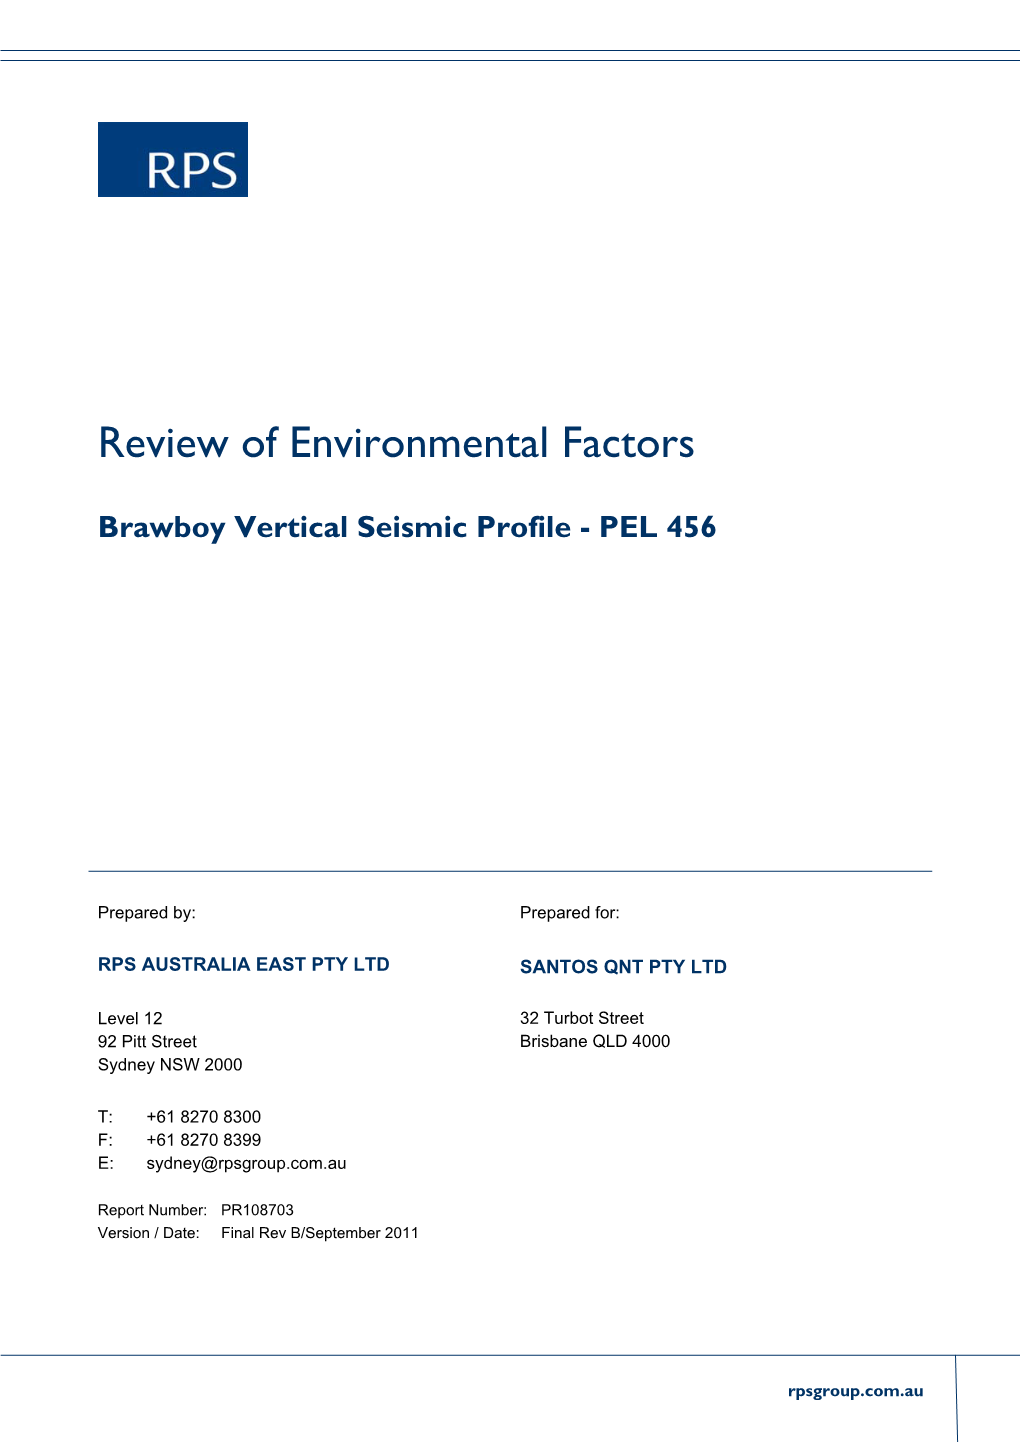 Review of Environmental Factors